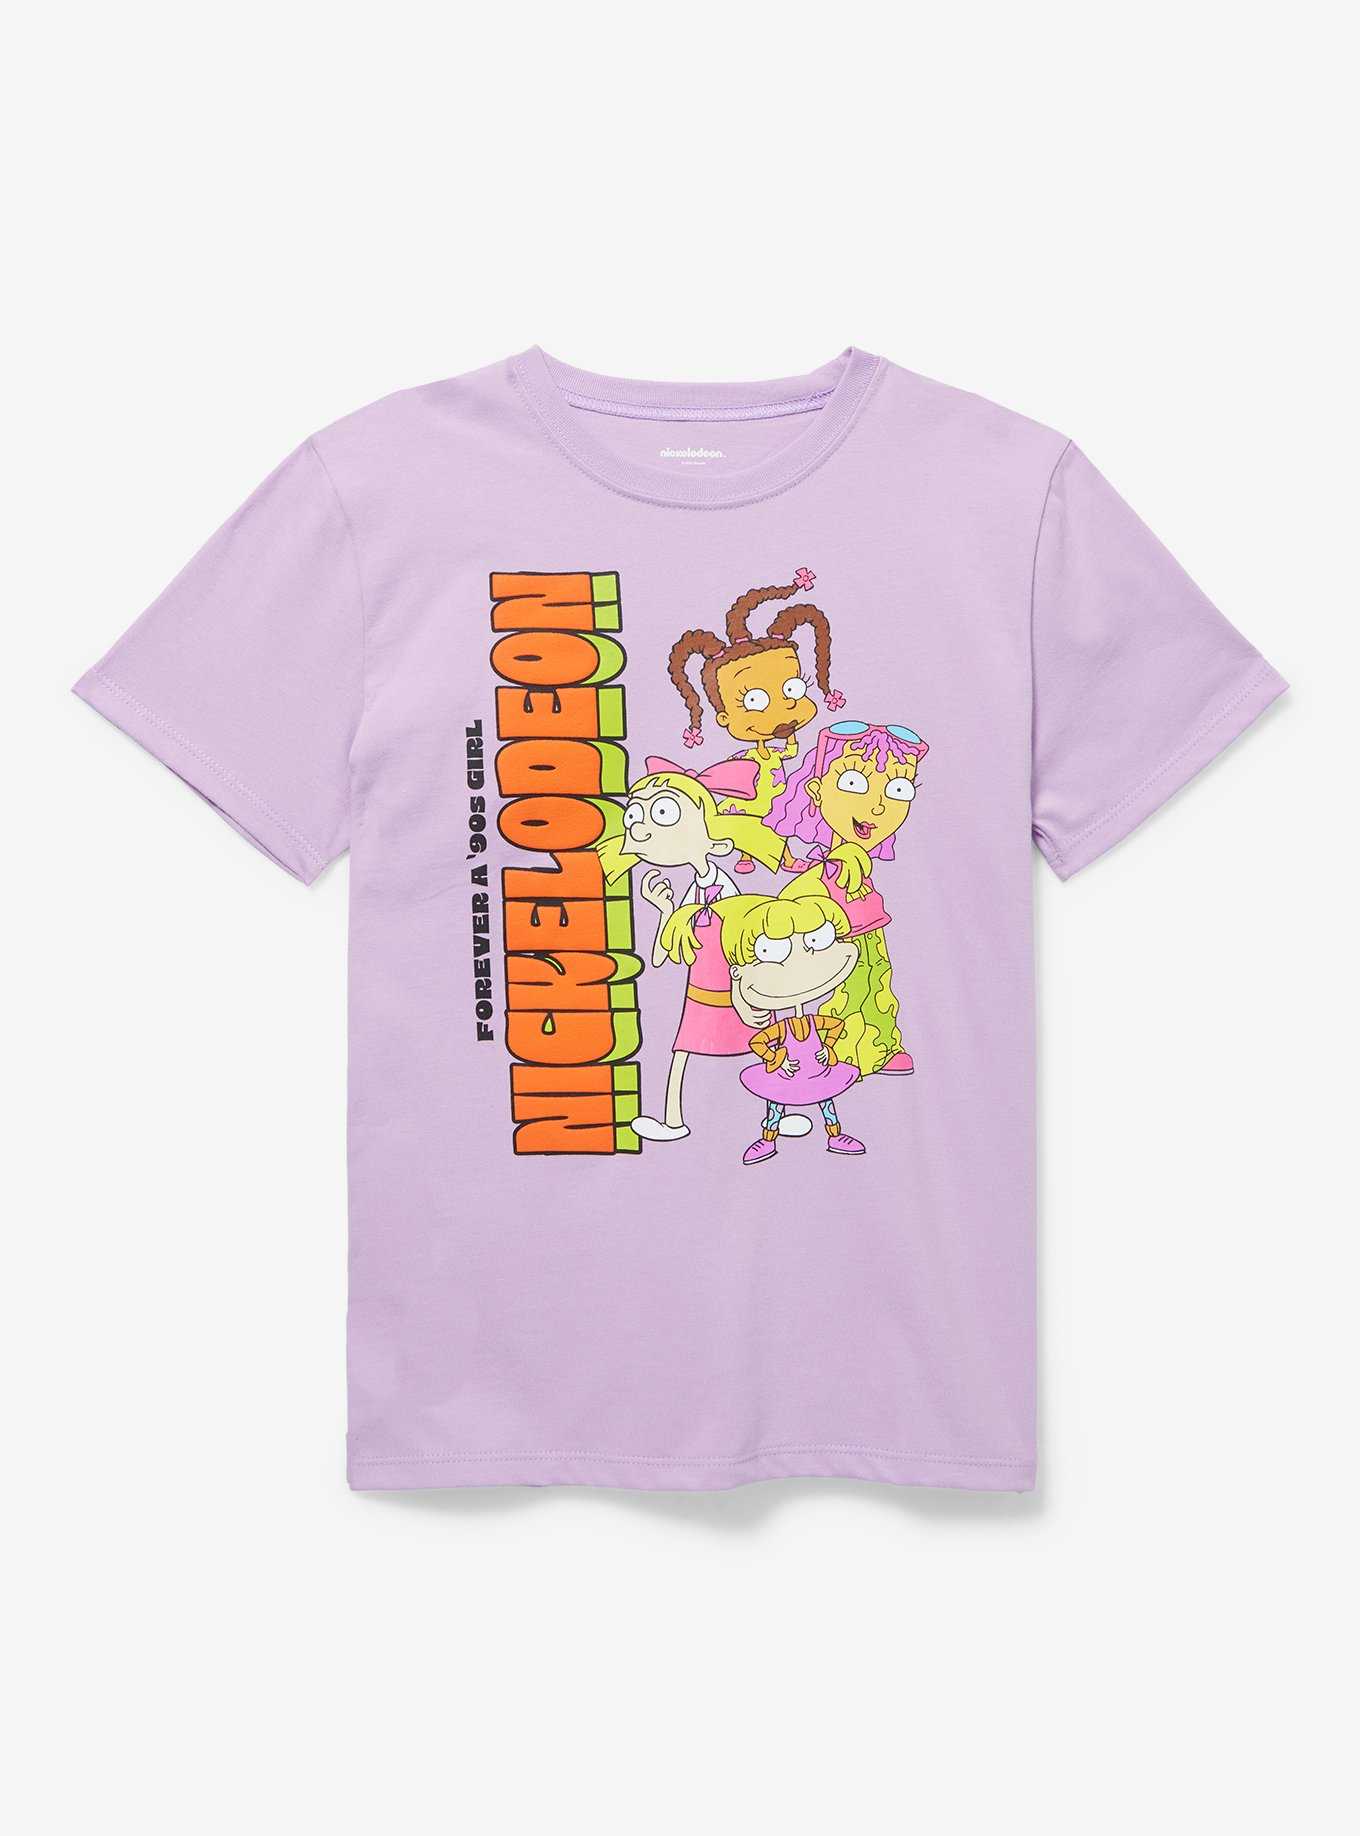 Nickelodeon Cartoon Girls Group Portrait Youth T-Shirt, , hi-res